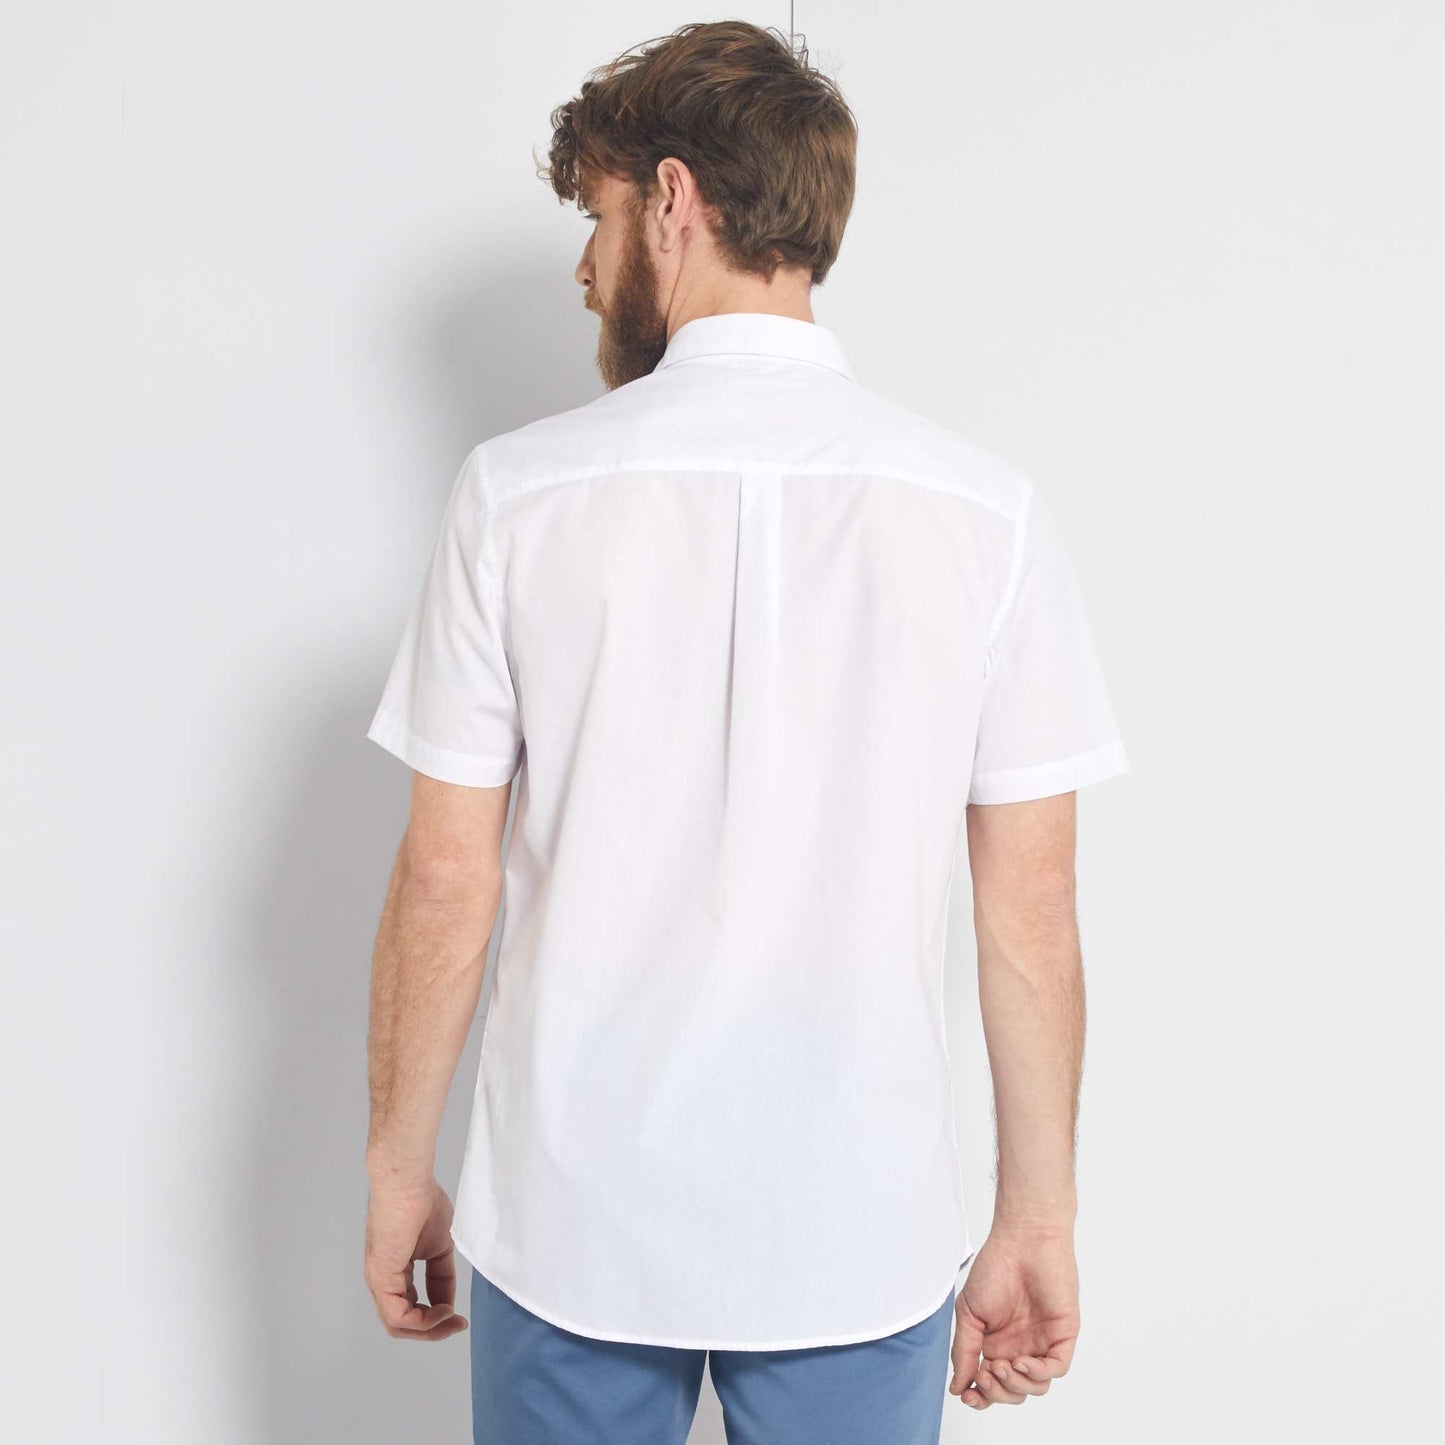 Camisa blanca manga corta blanco